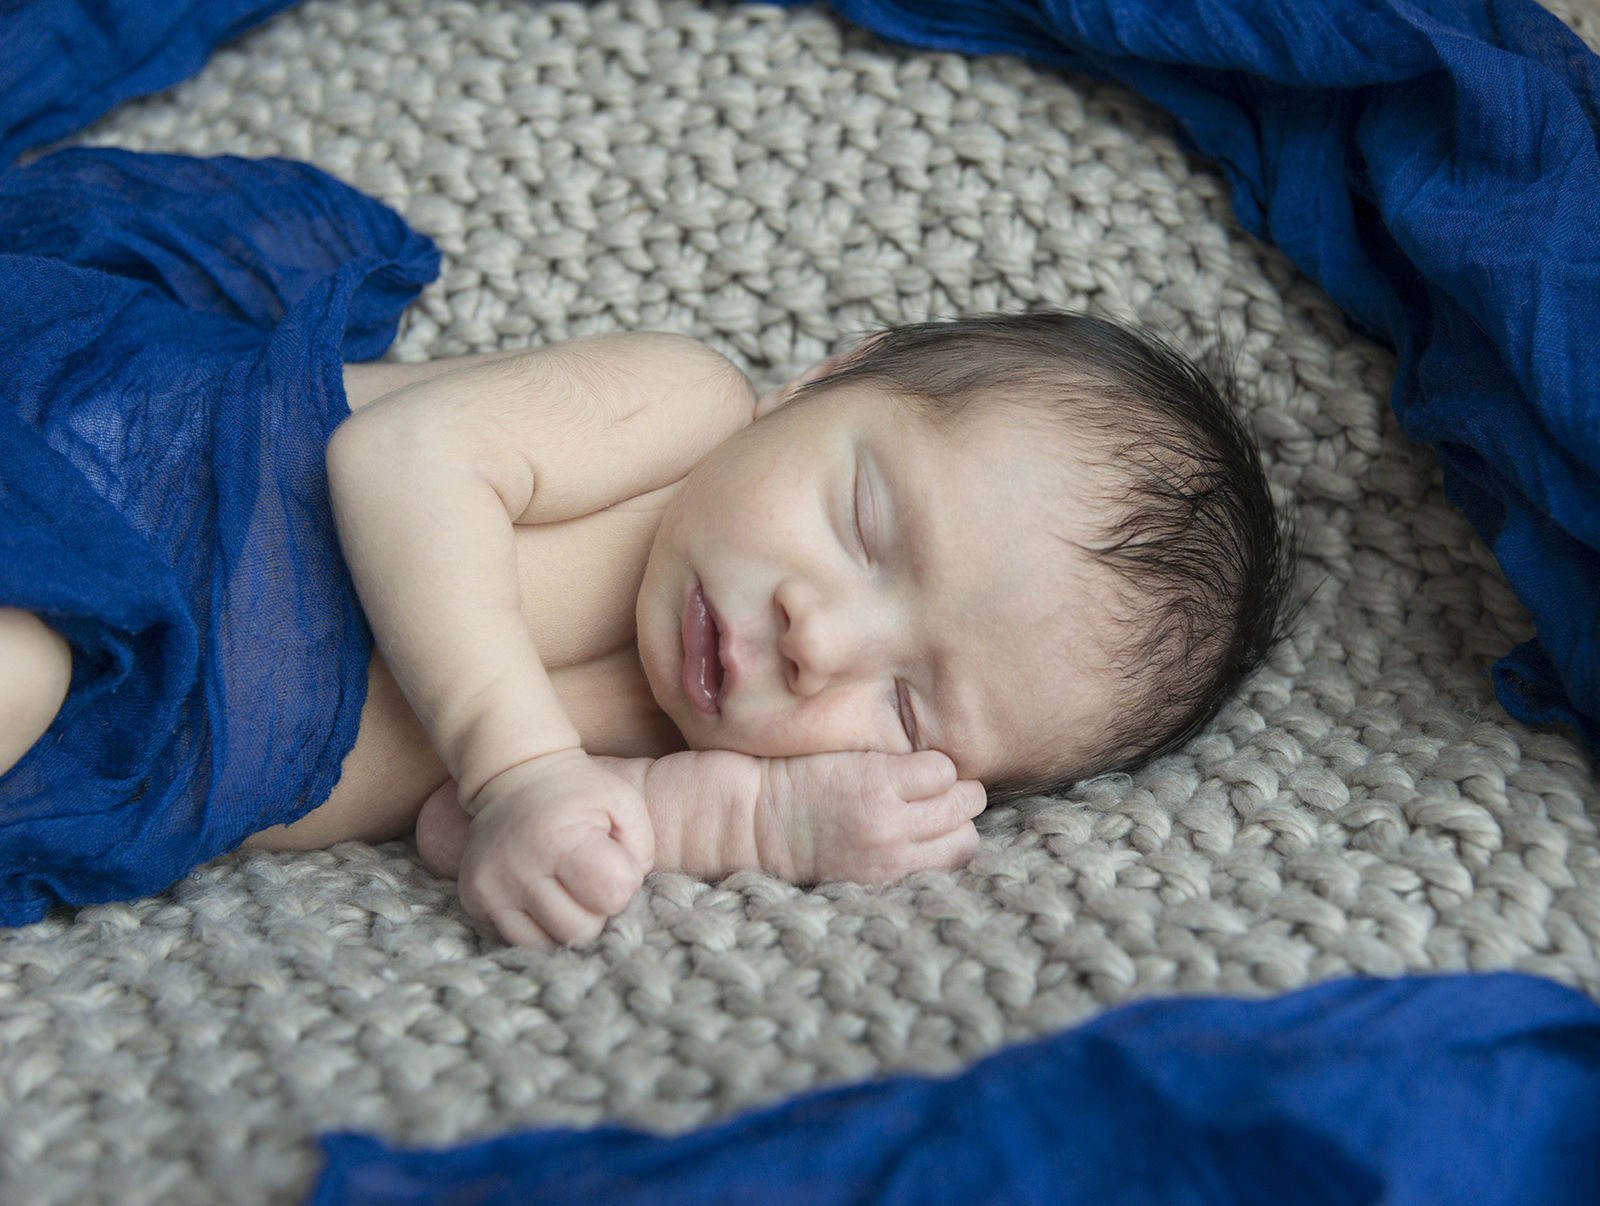 bébé endormis avec un tissu bleu roi